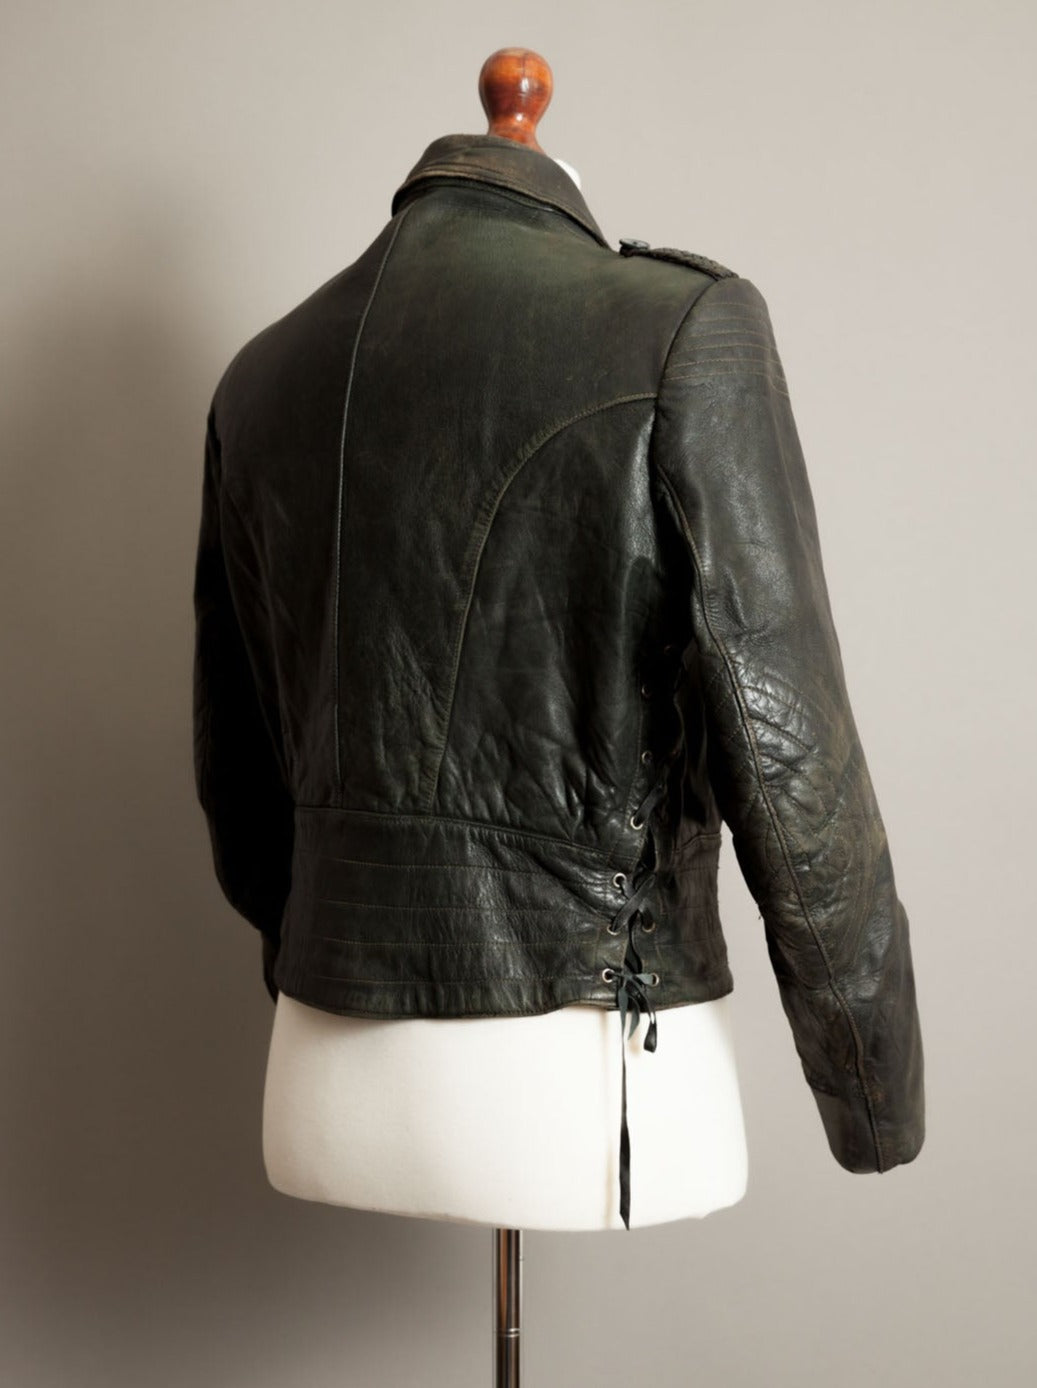 Vintage 1950s German Leather Motorcycle Jacket - Small (38-40)